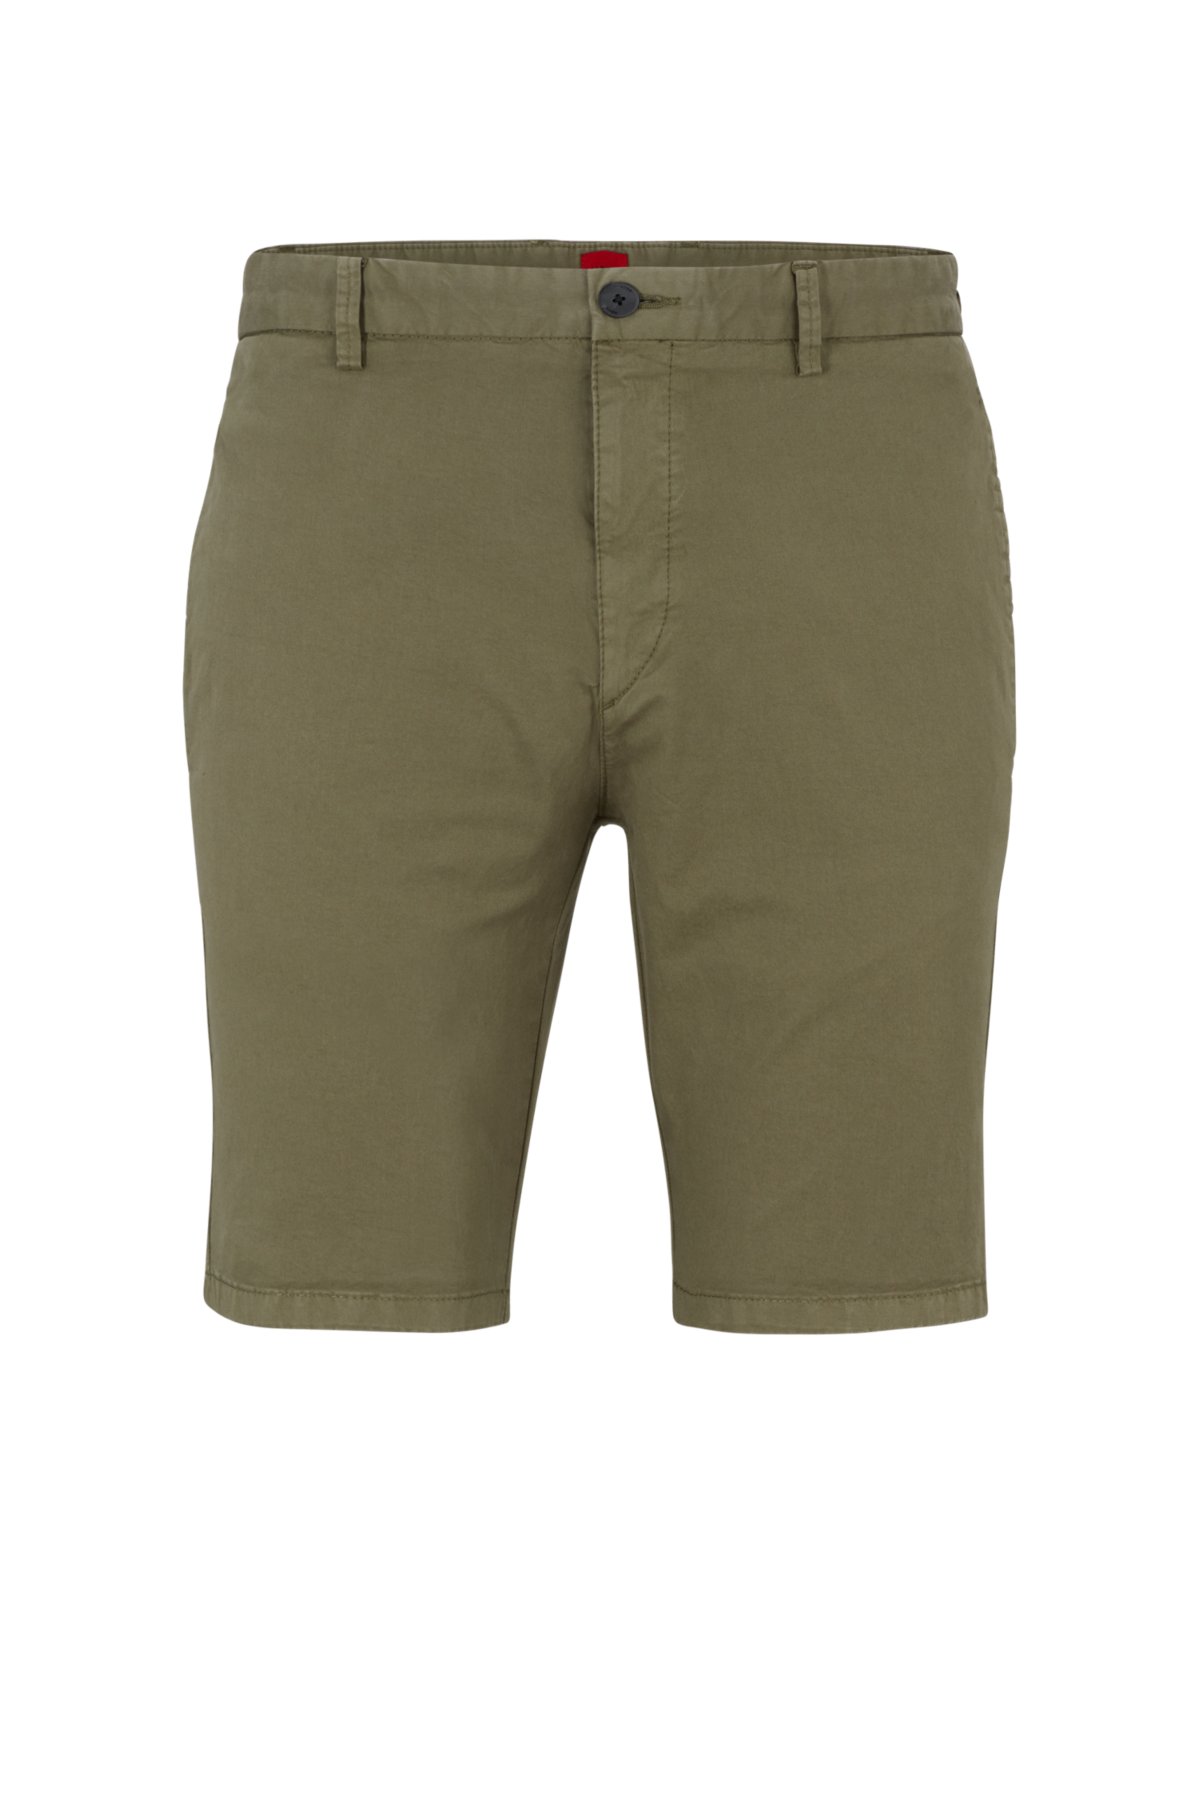 HUGO Slim-fit shorts in stretch-cotton gabardine